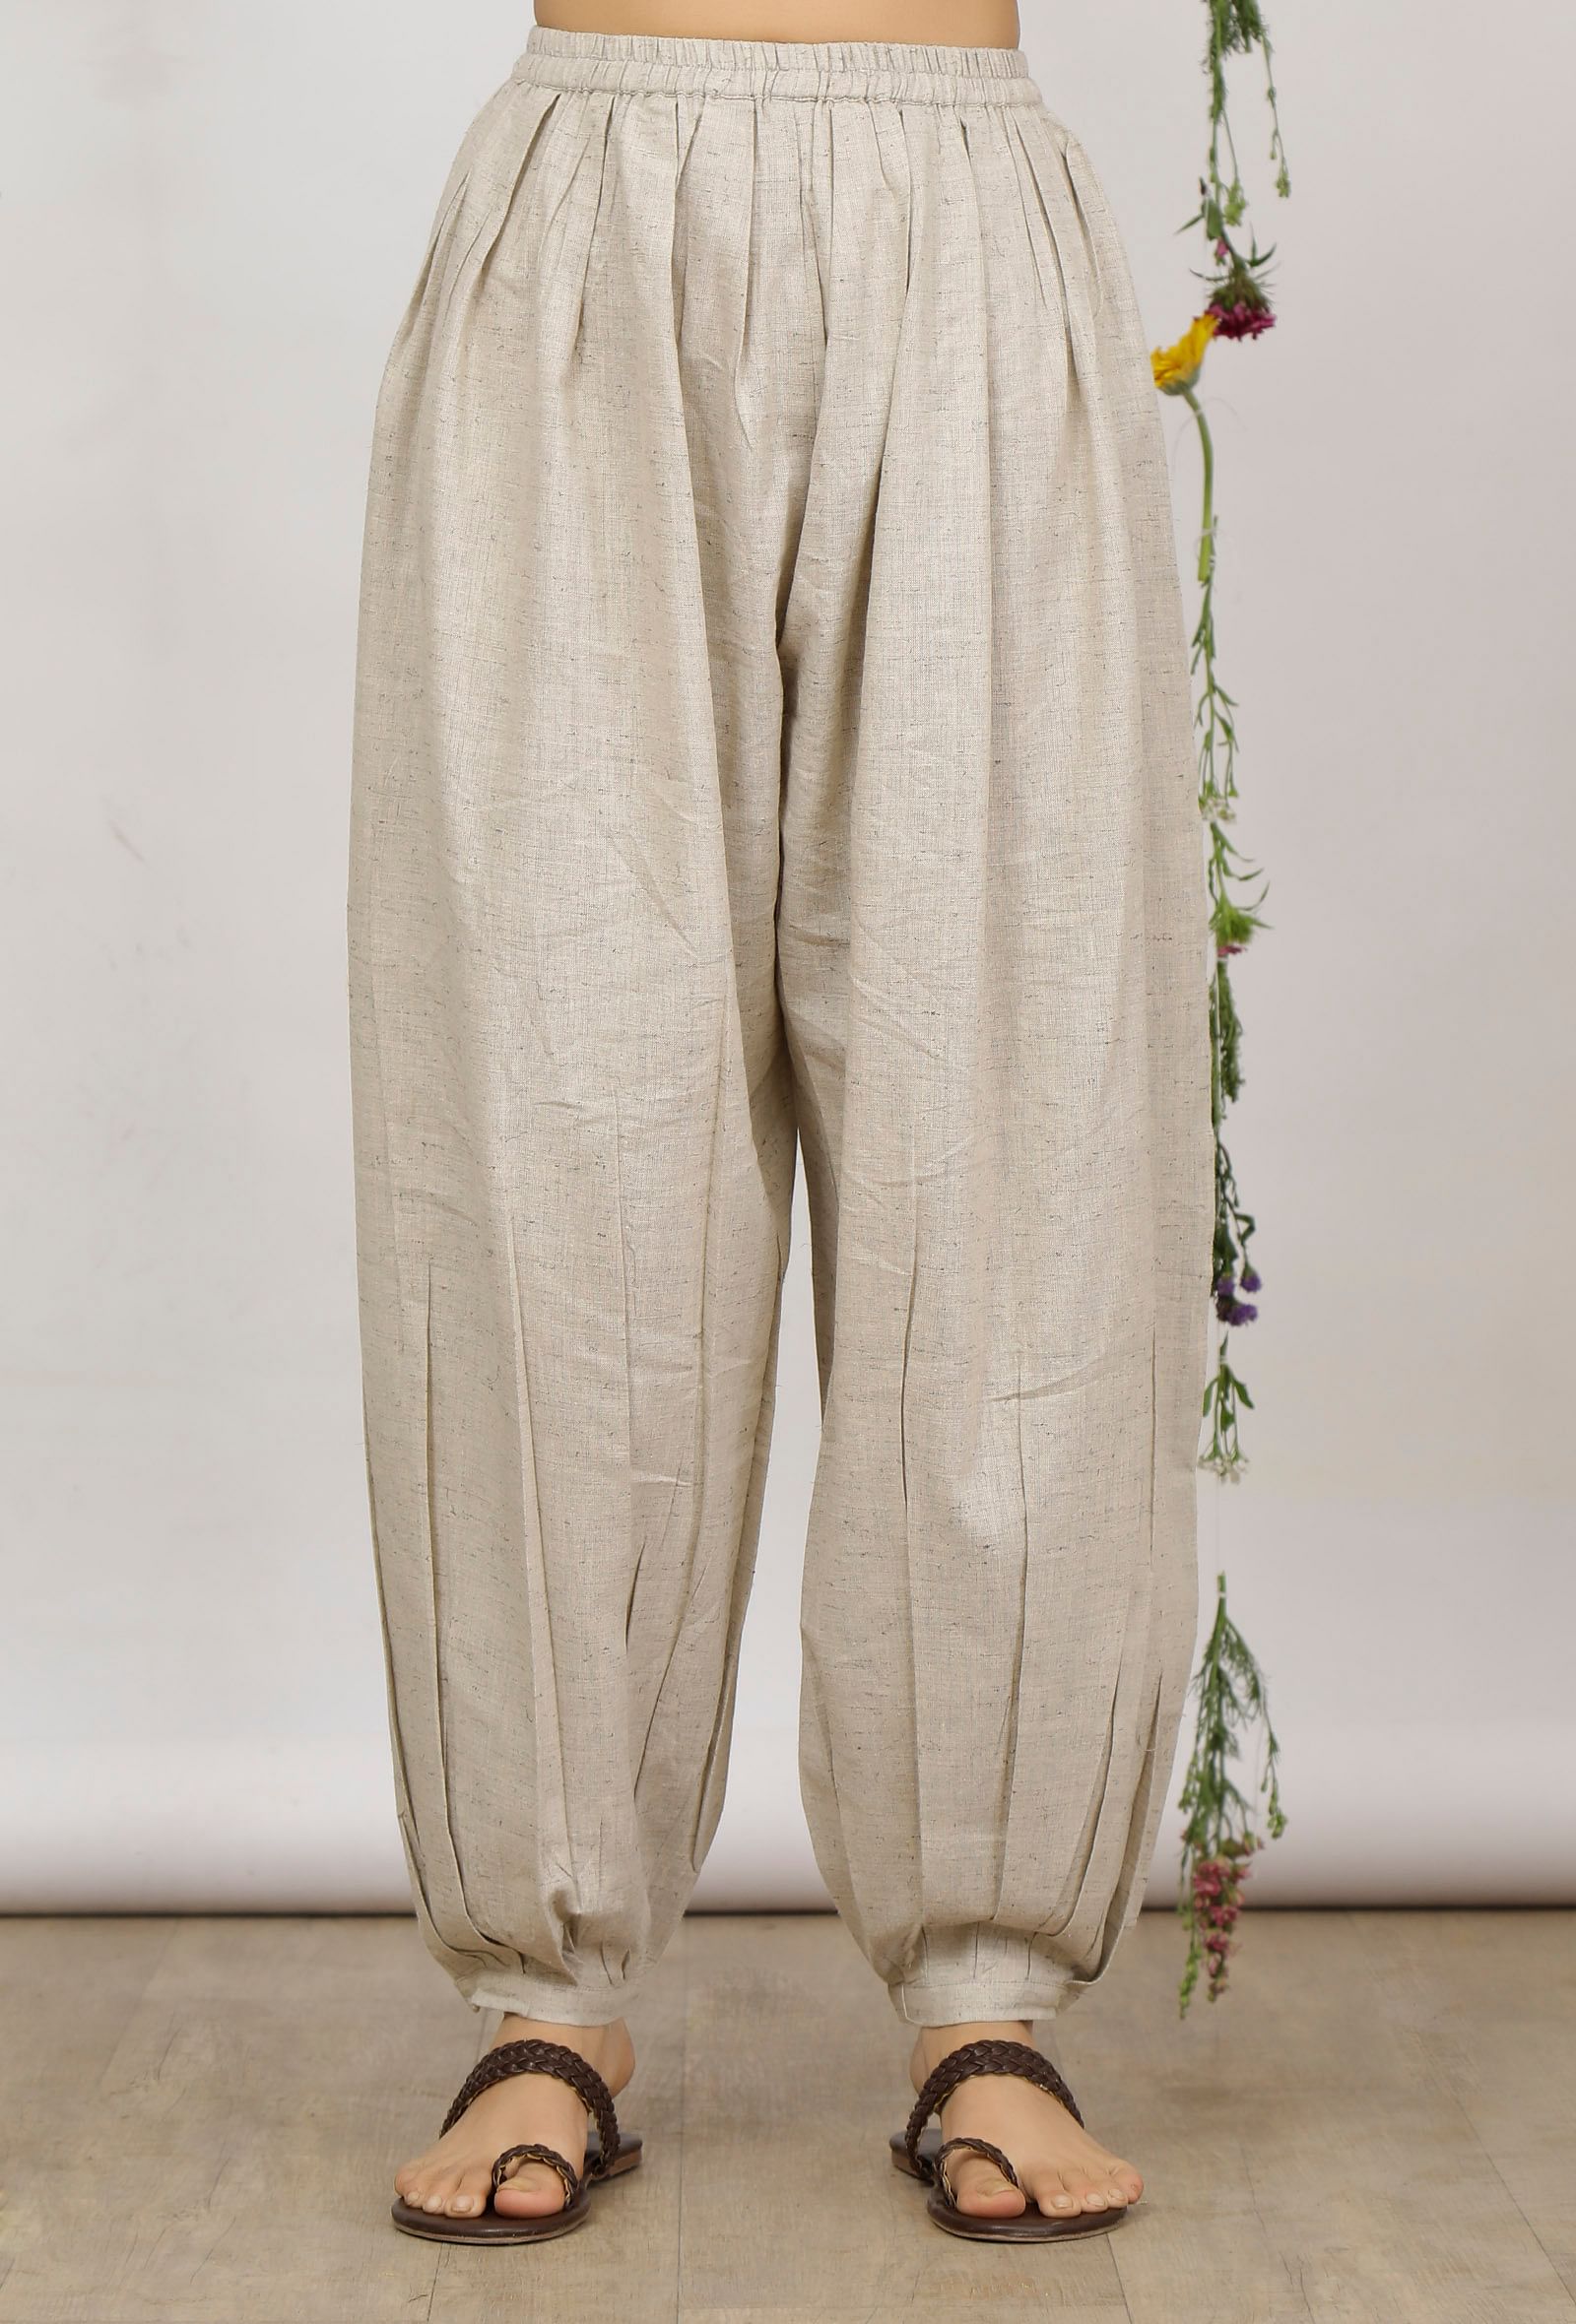 Buy Viku Womens Cotton Harem Pants Free Size Brown Cream at Amazonin